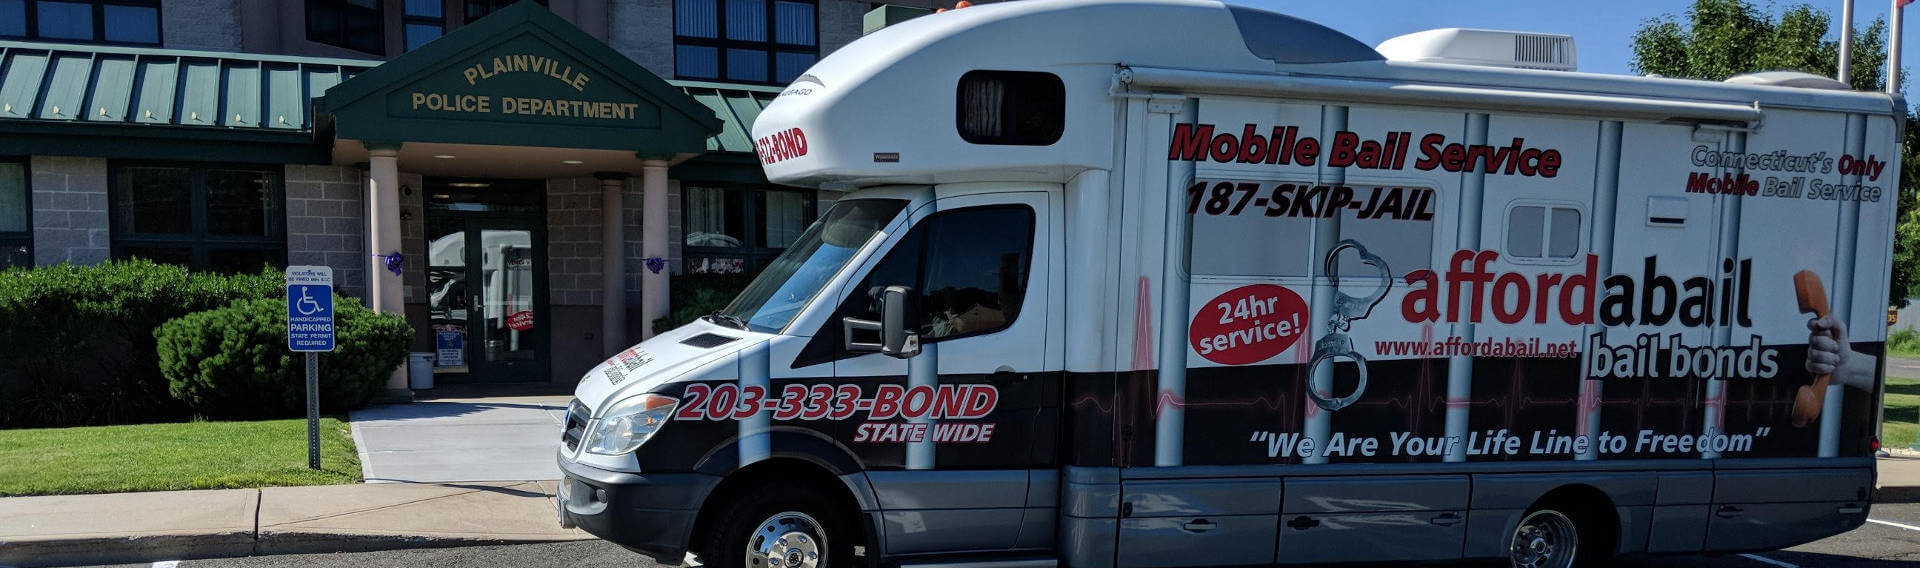 Mobile bail bonds service in Plainville, CT